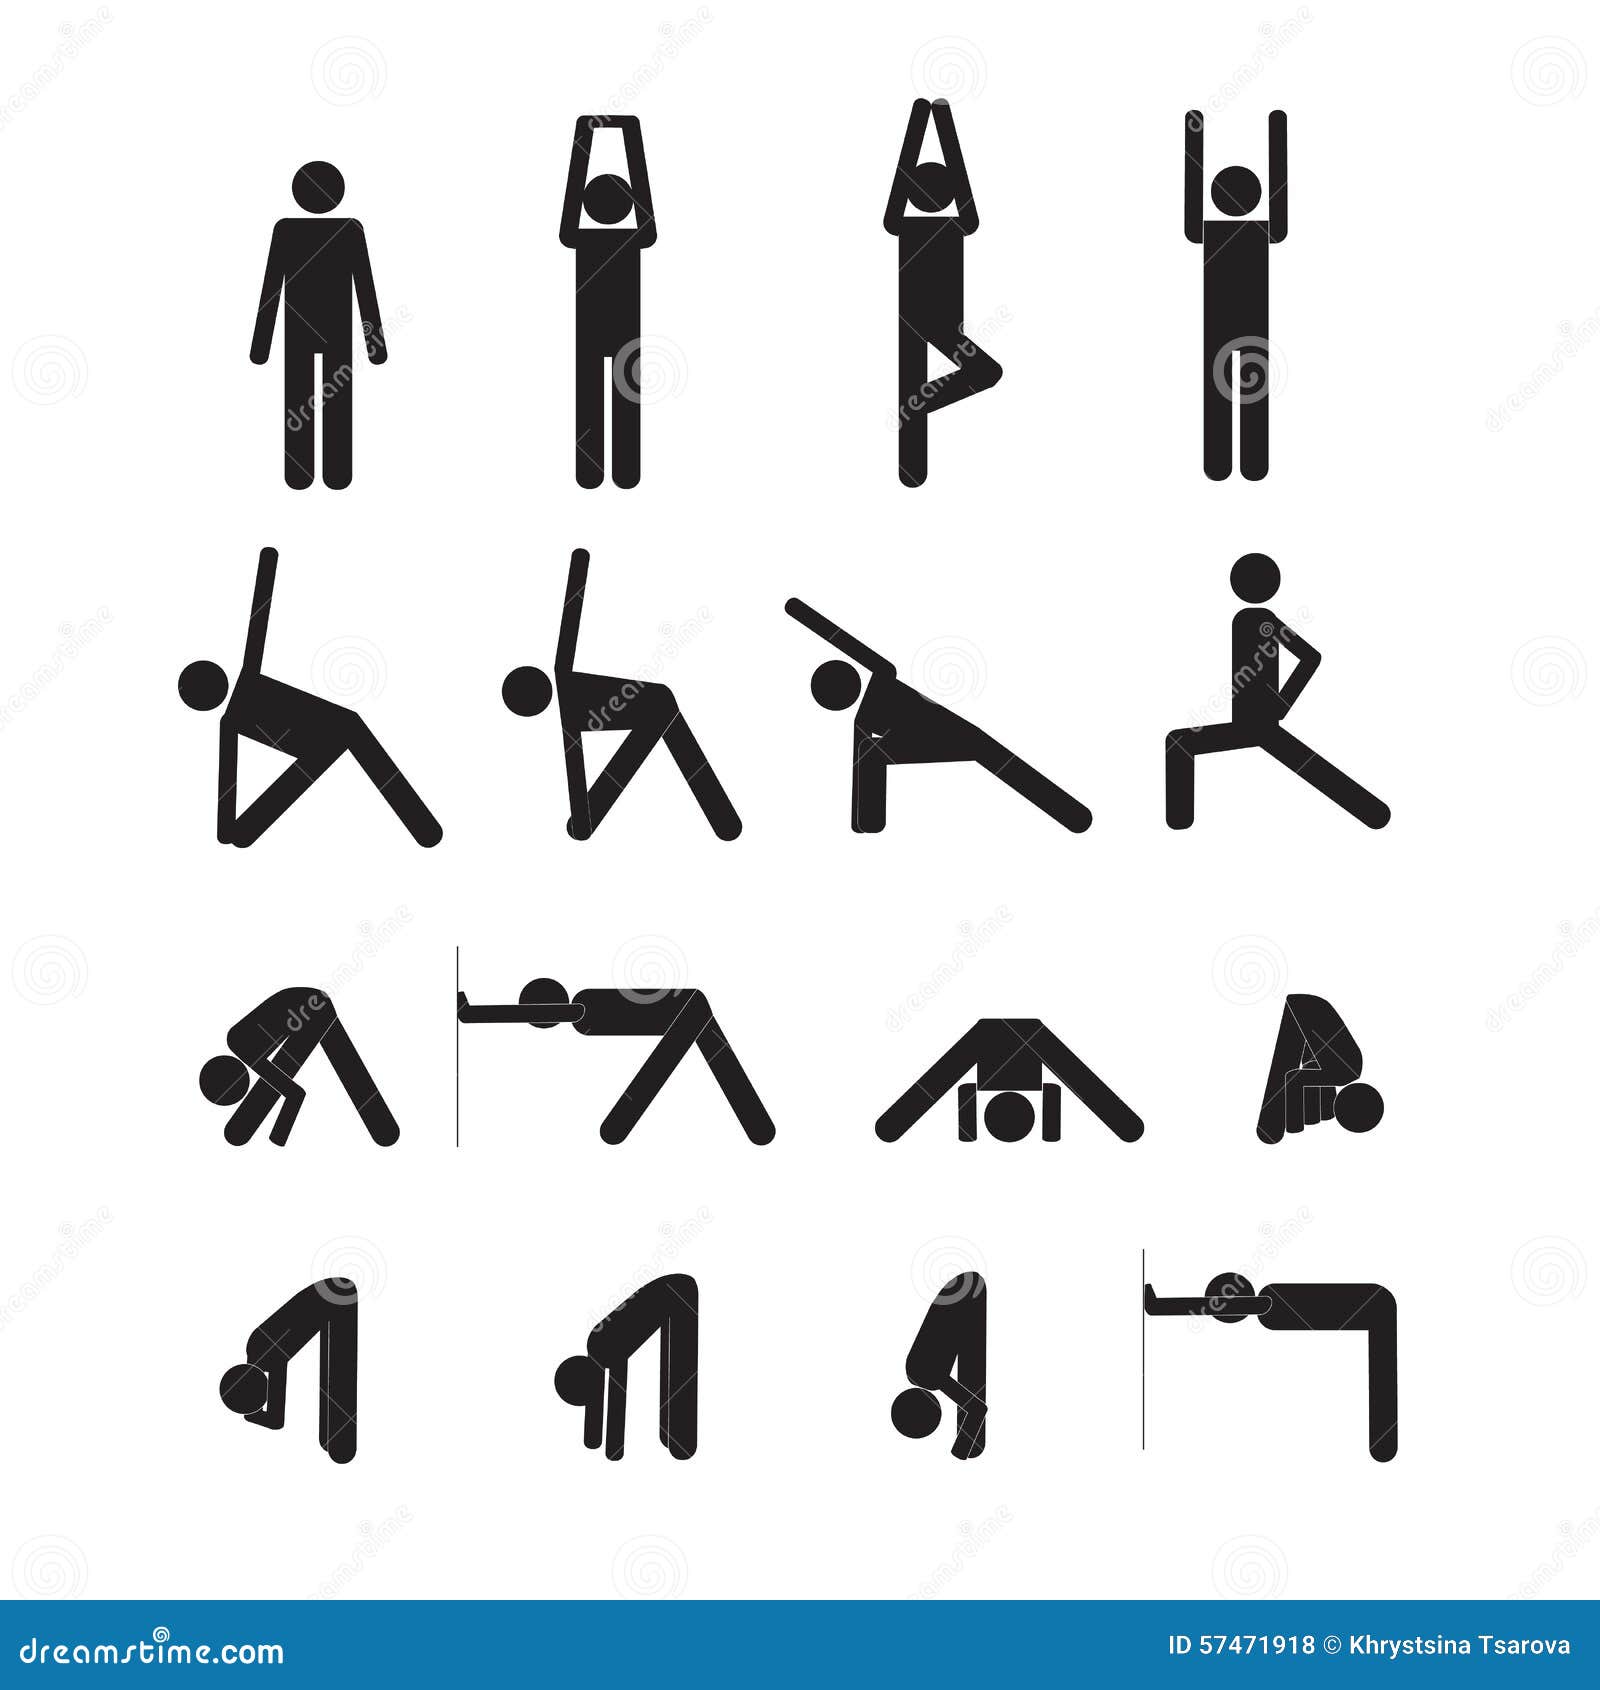 8 Yoga Stick Poses ideas  yoga, yoga stick figures, stick figures